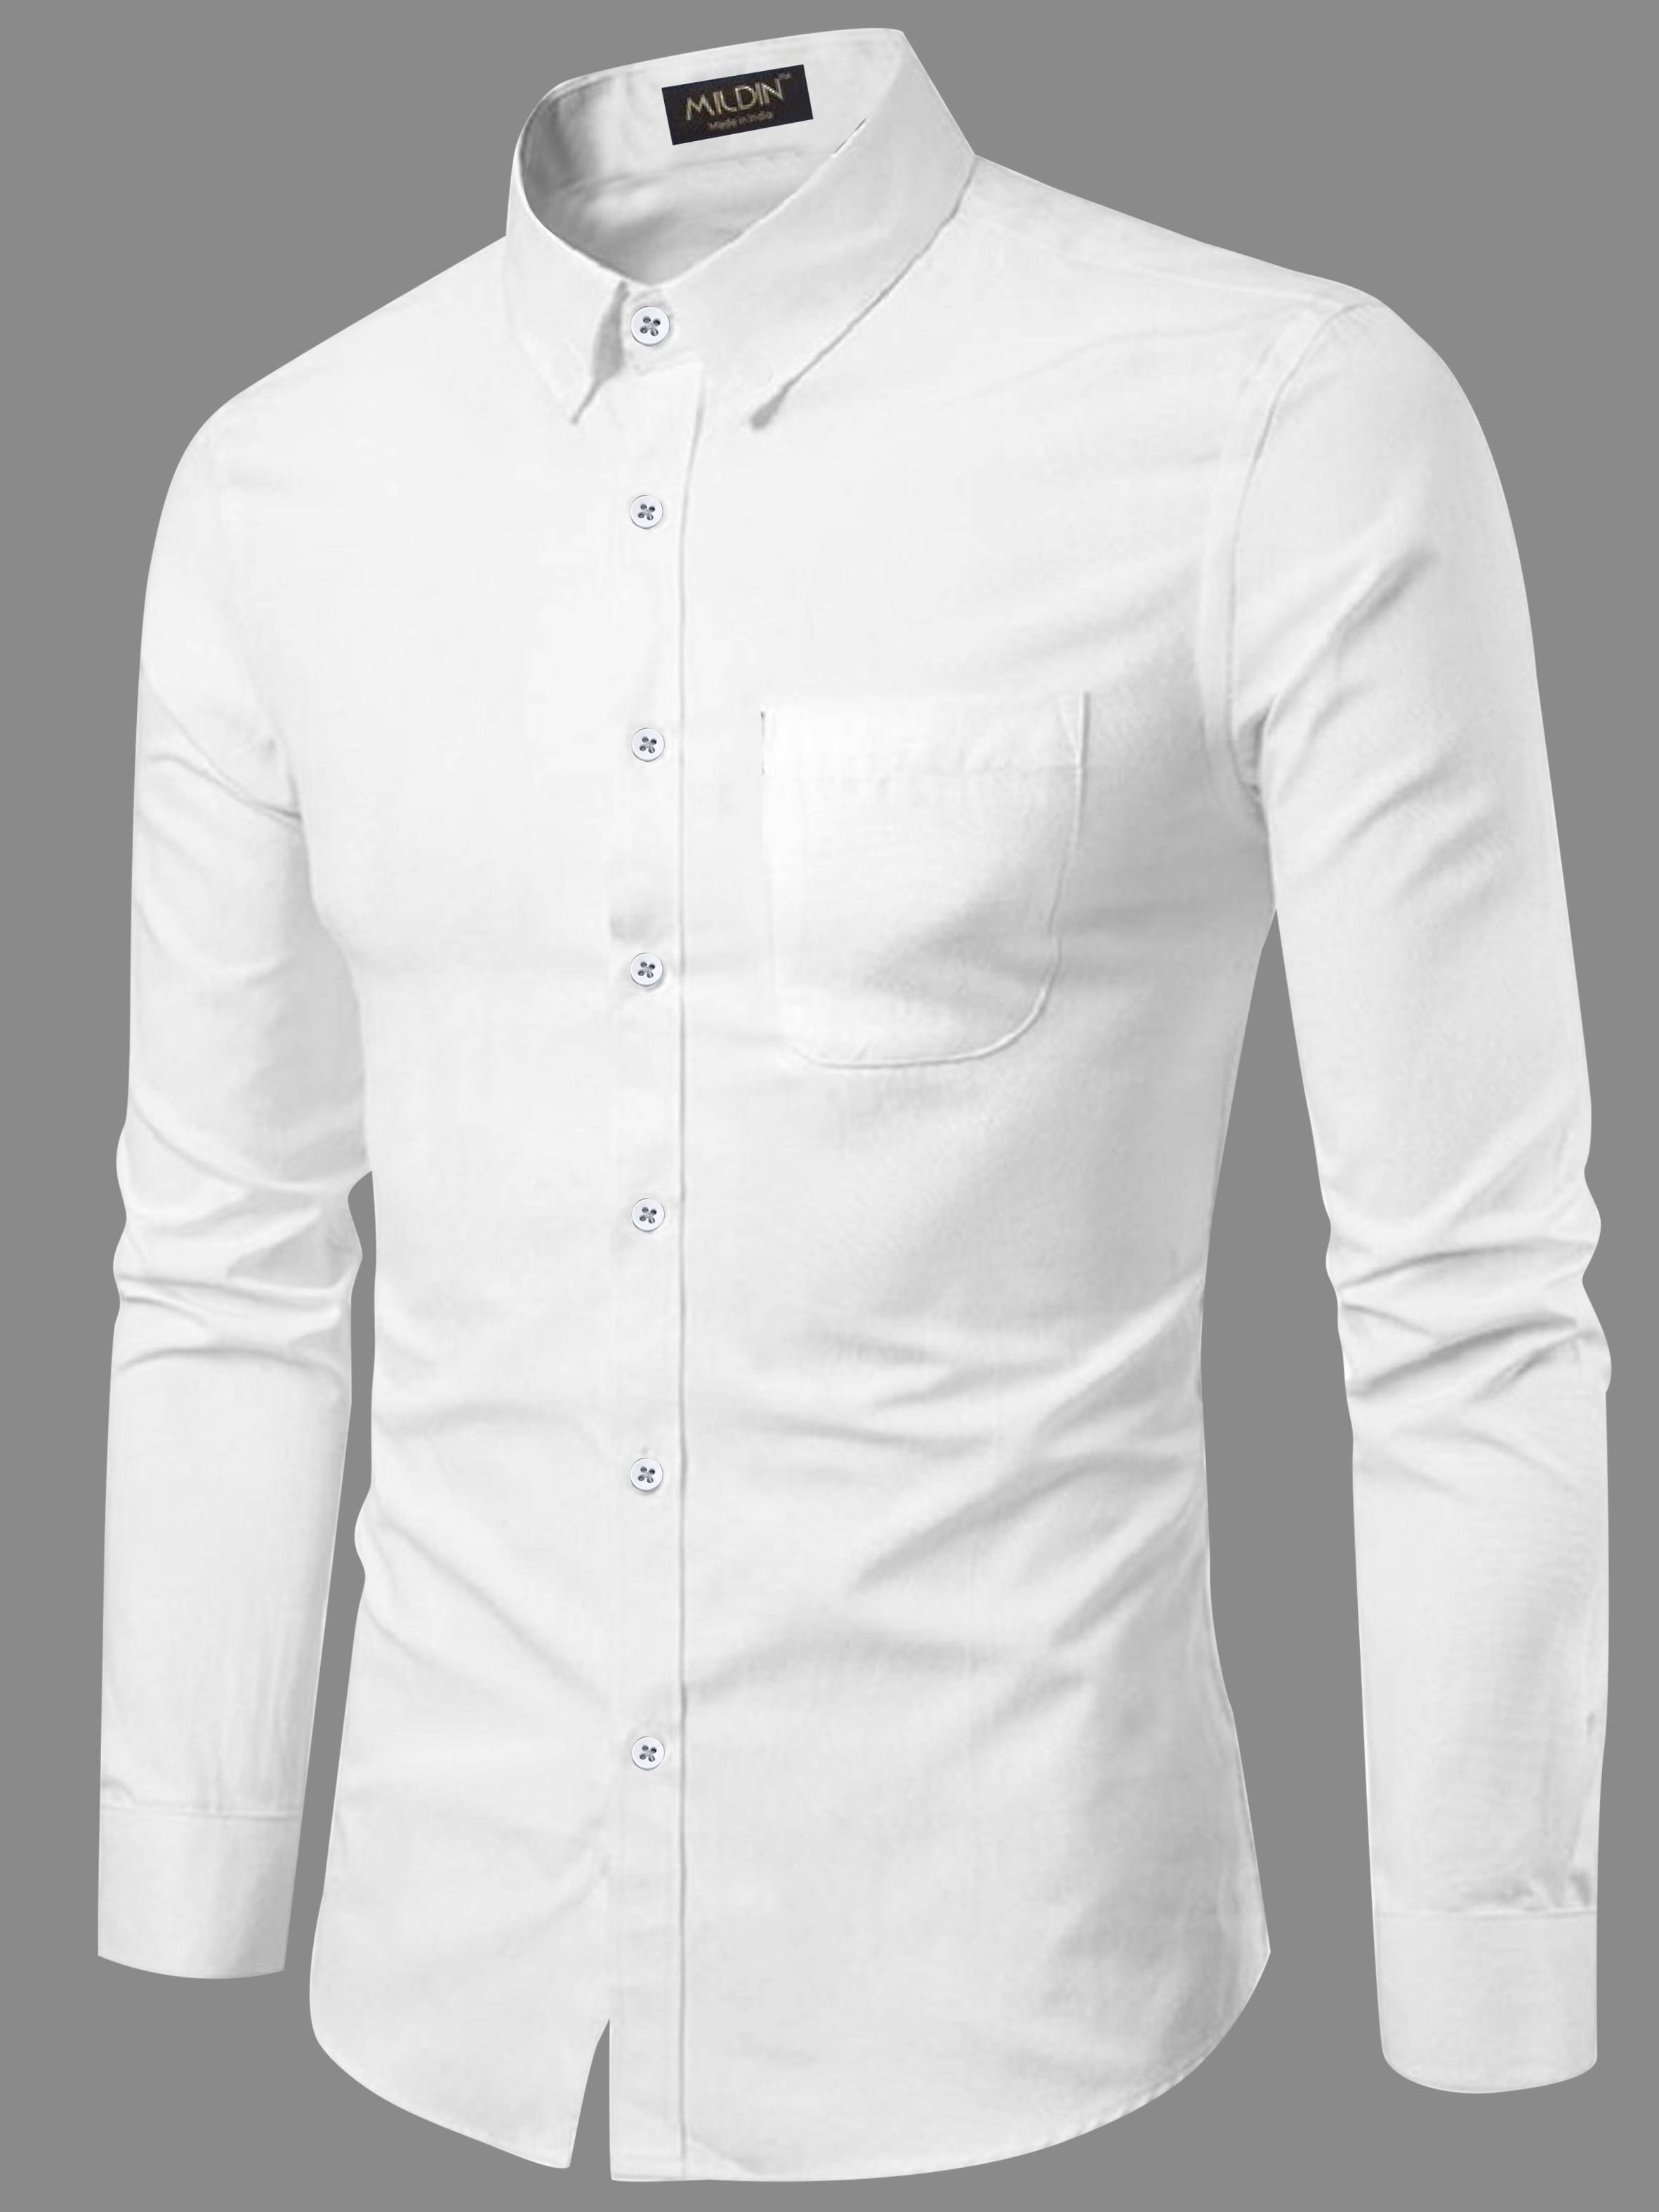 MILDIN Men Solid Formal White Shirt - Buy MILDIN Men Solid Formal White ...